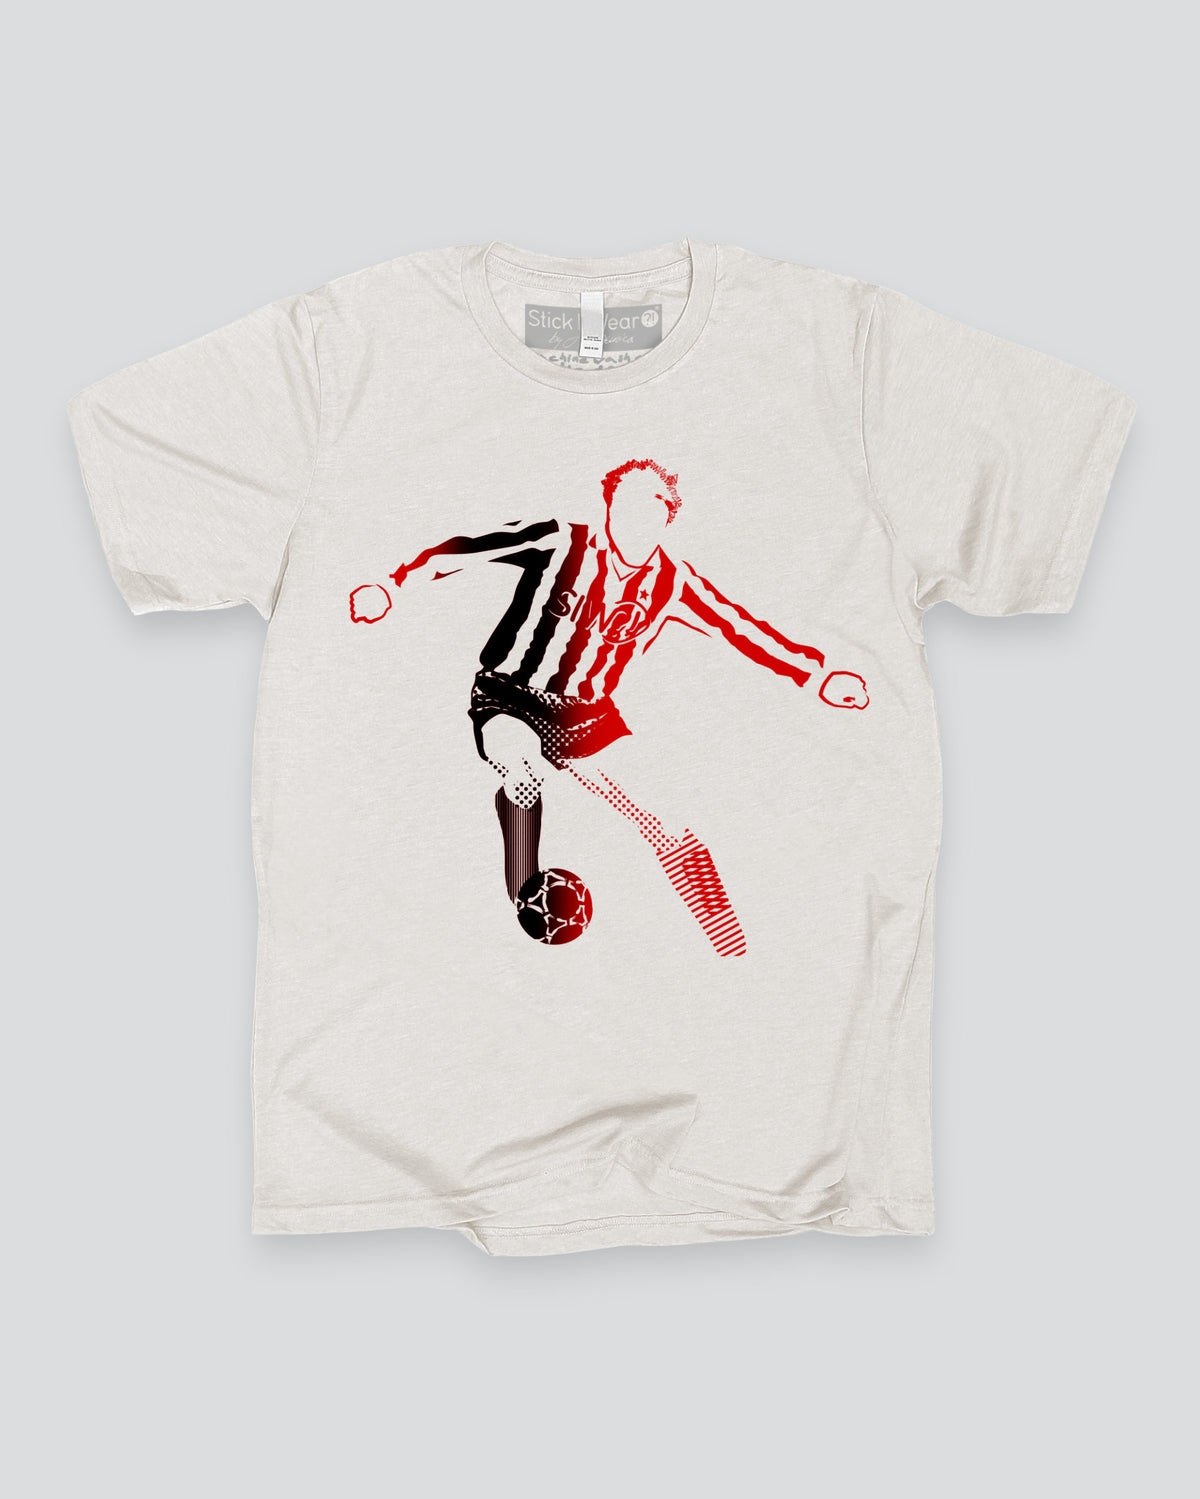 THE SWAN Soccer Stance T-Shirt